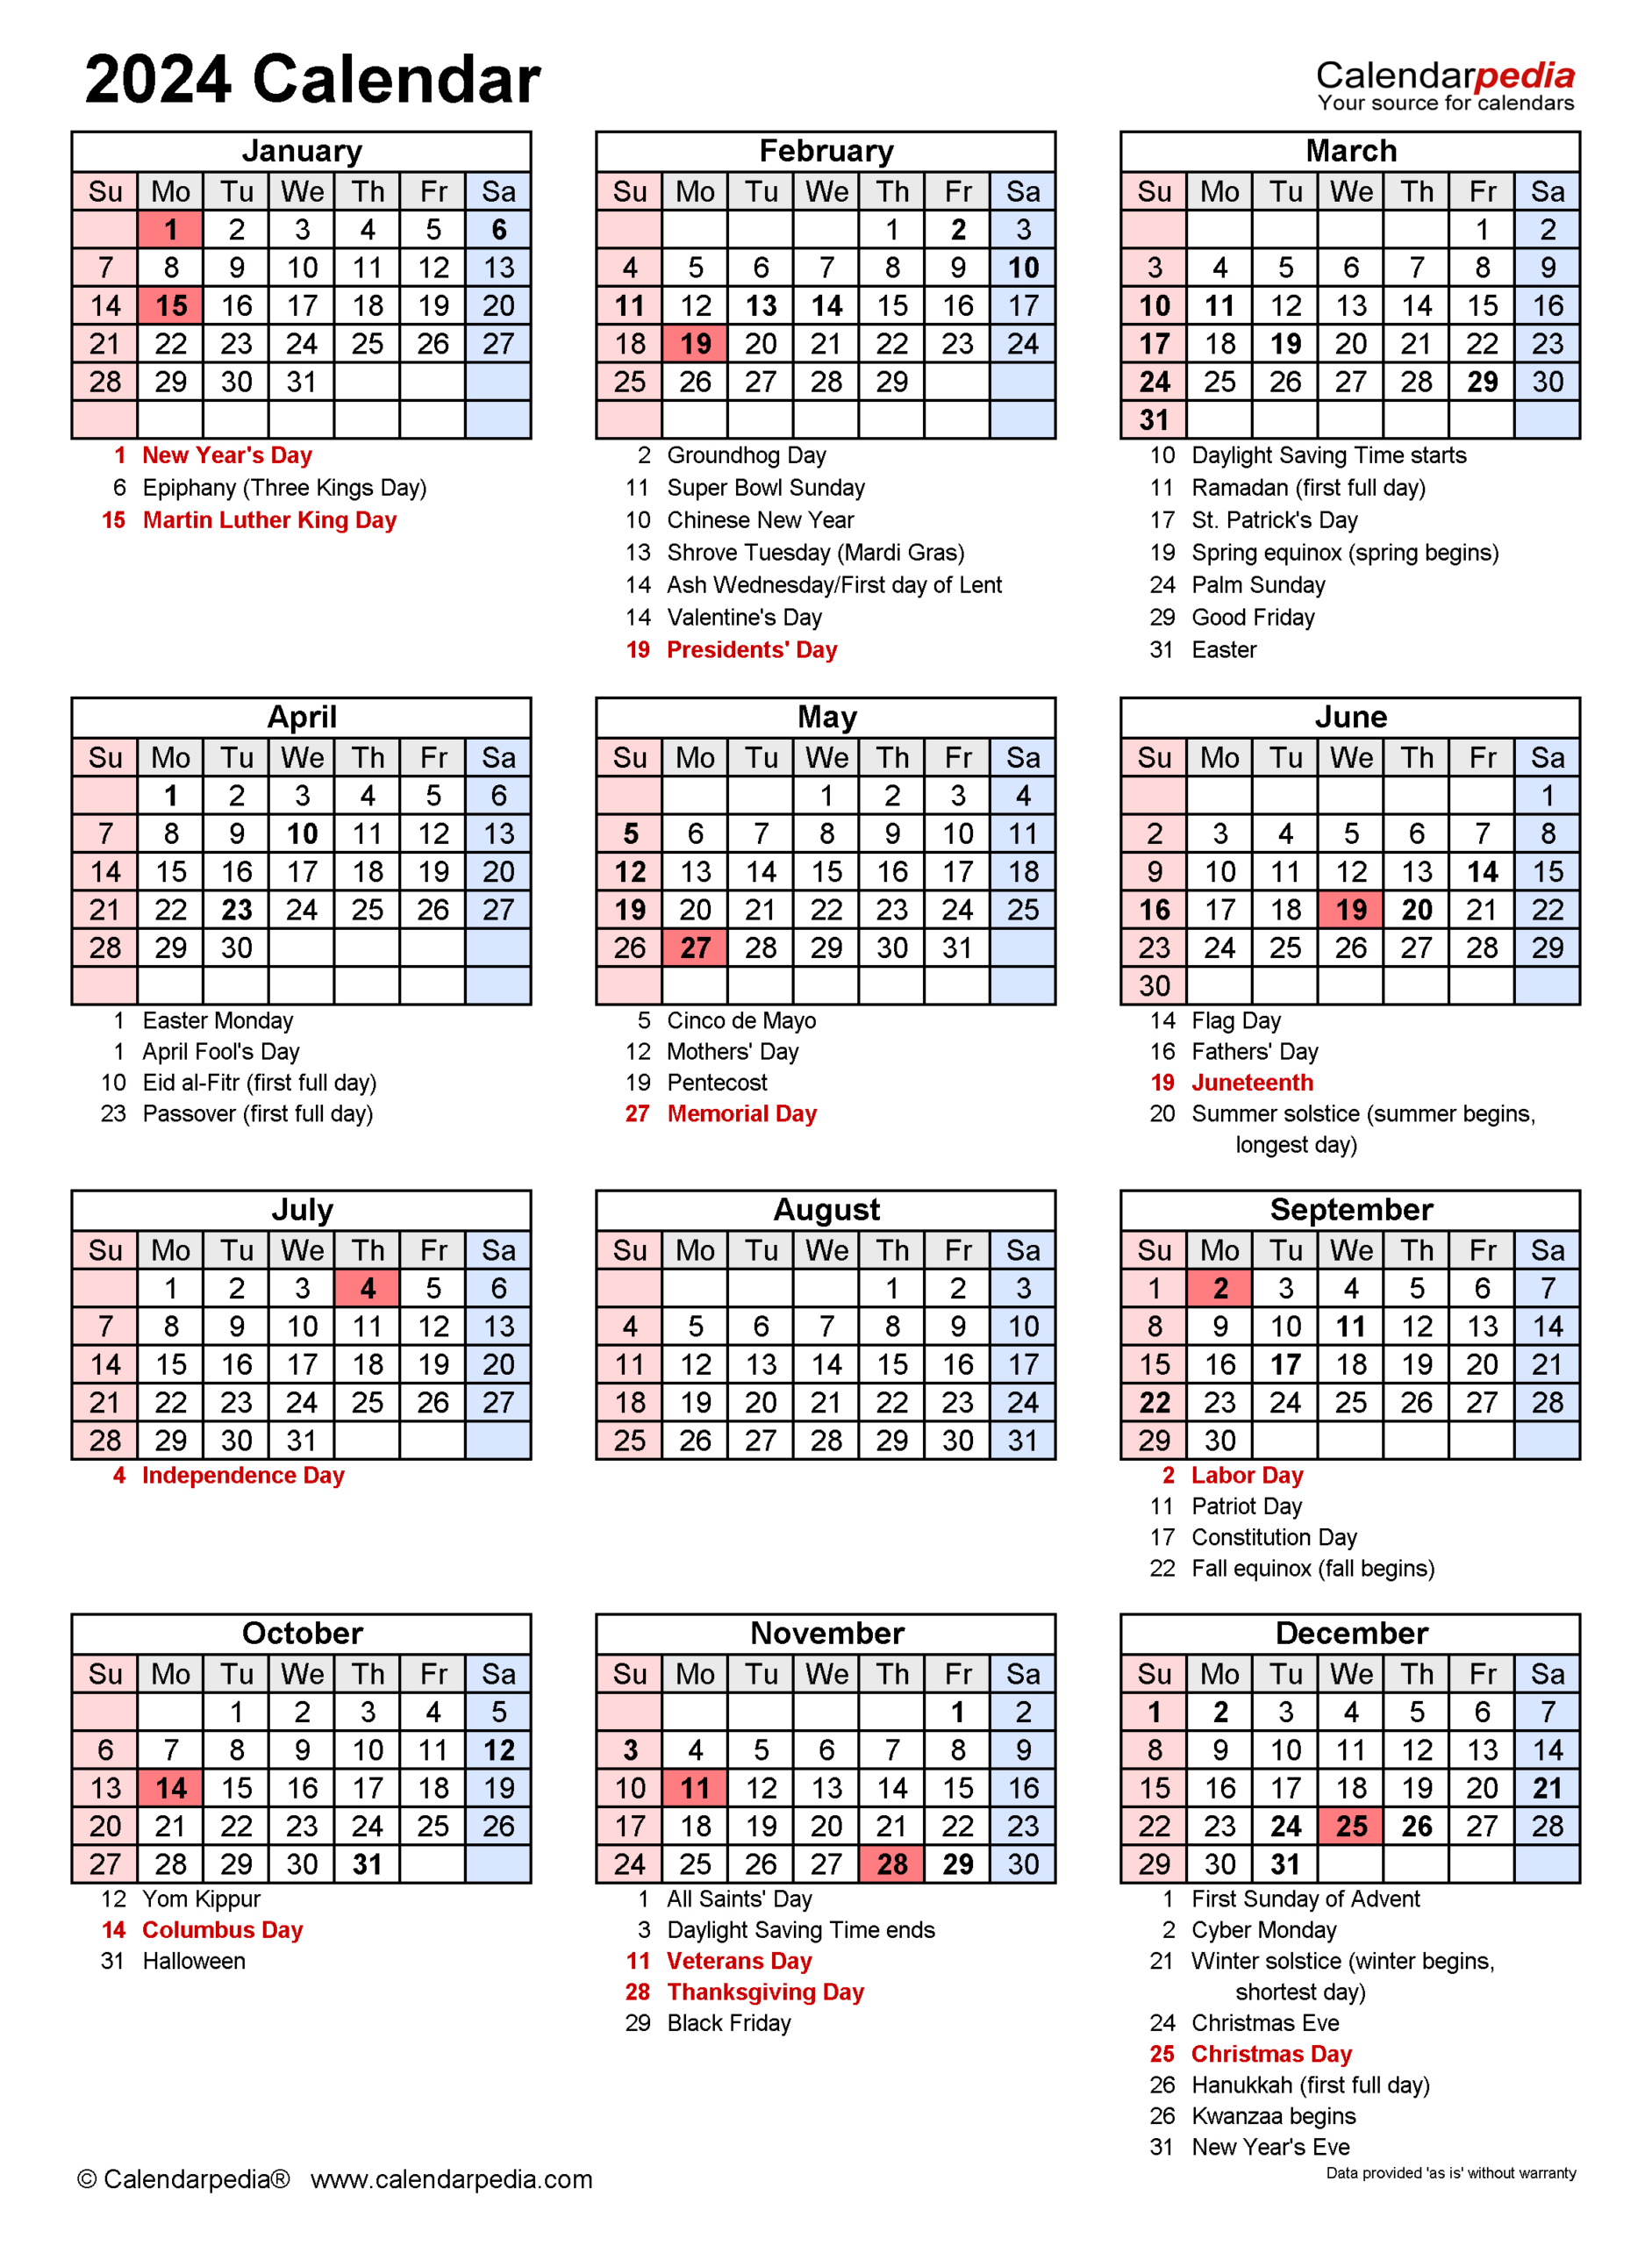 2024 Calendar - Free Printable Excel Templates - Calendarpedia | Time And Date Calendar 2024 Printable